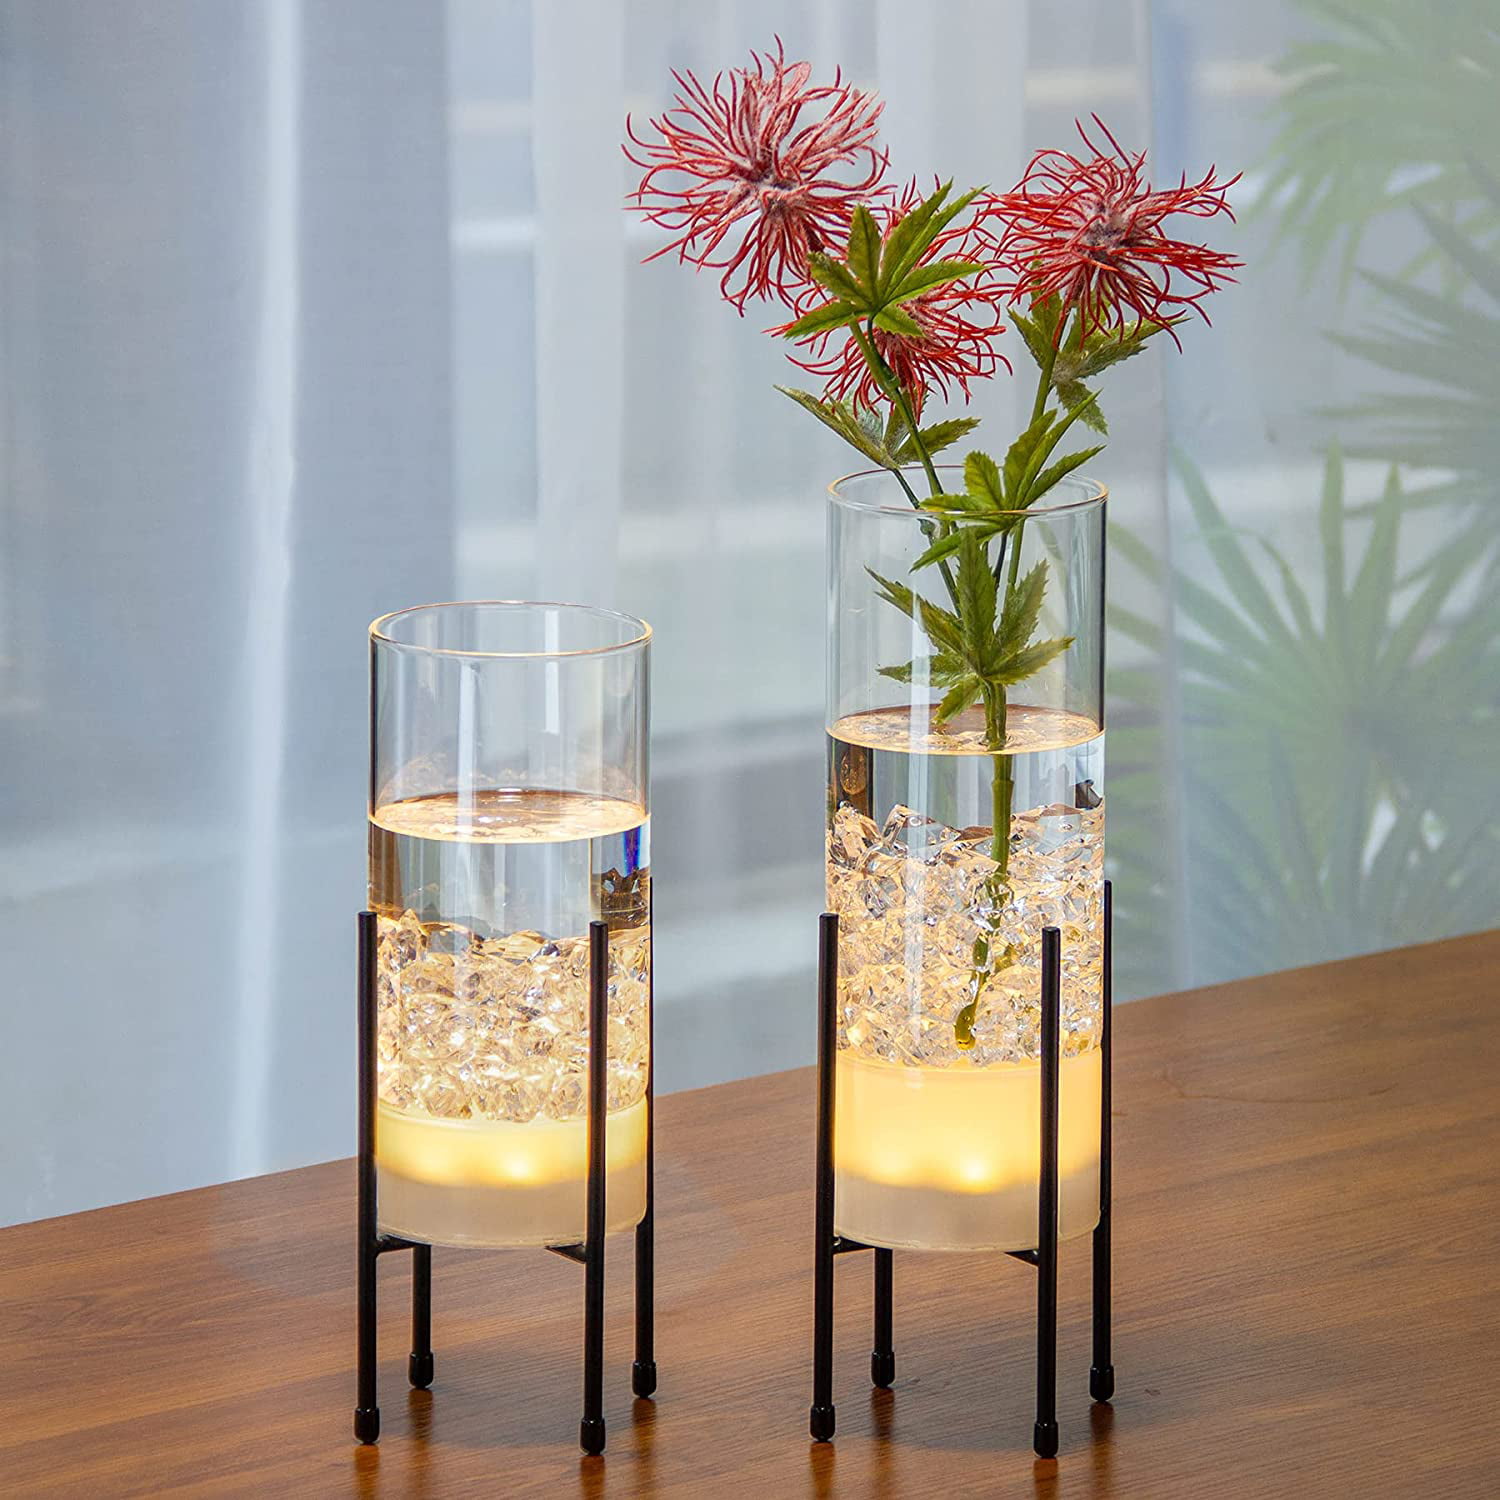 Blue Crystal Tea Light Candle Holder Wedding Table Centerpiece Flower Vase Decor 